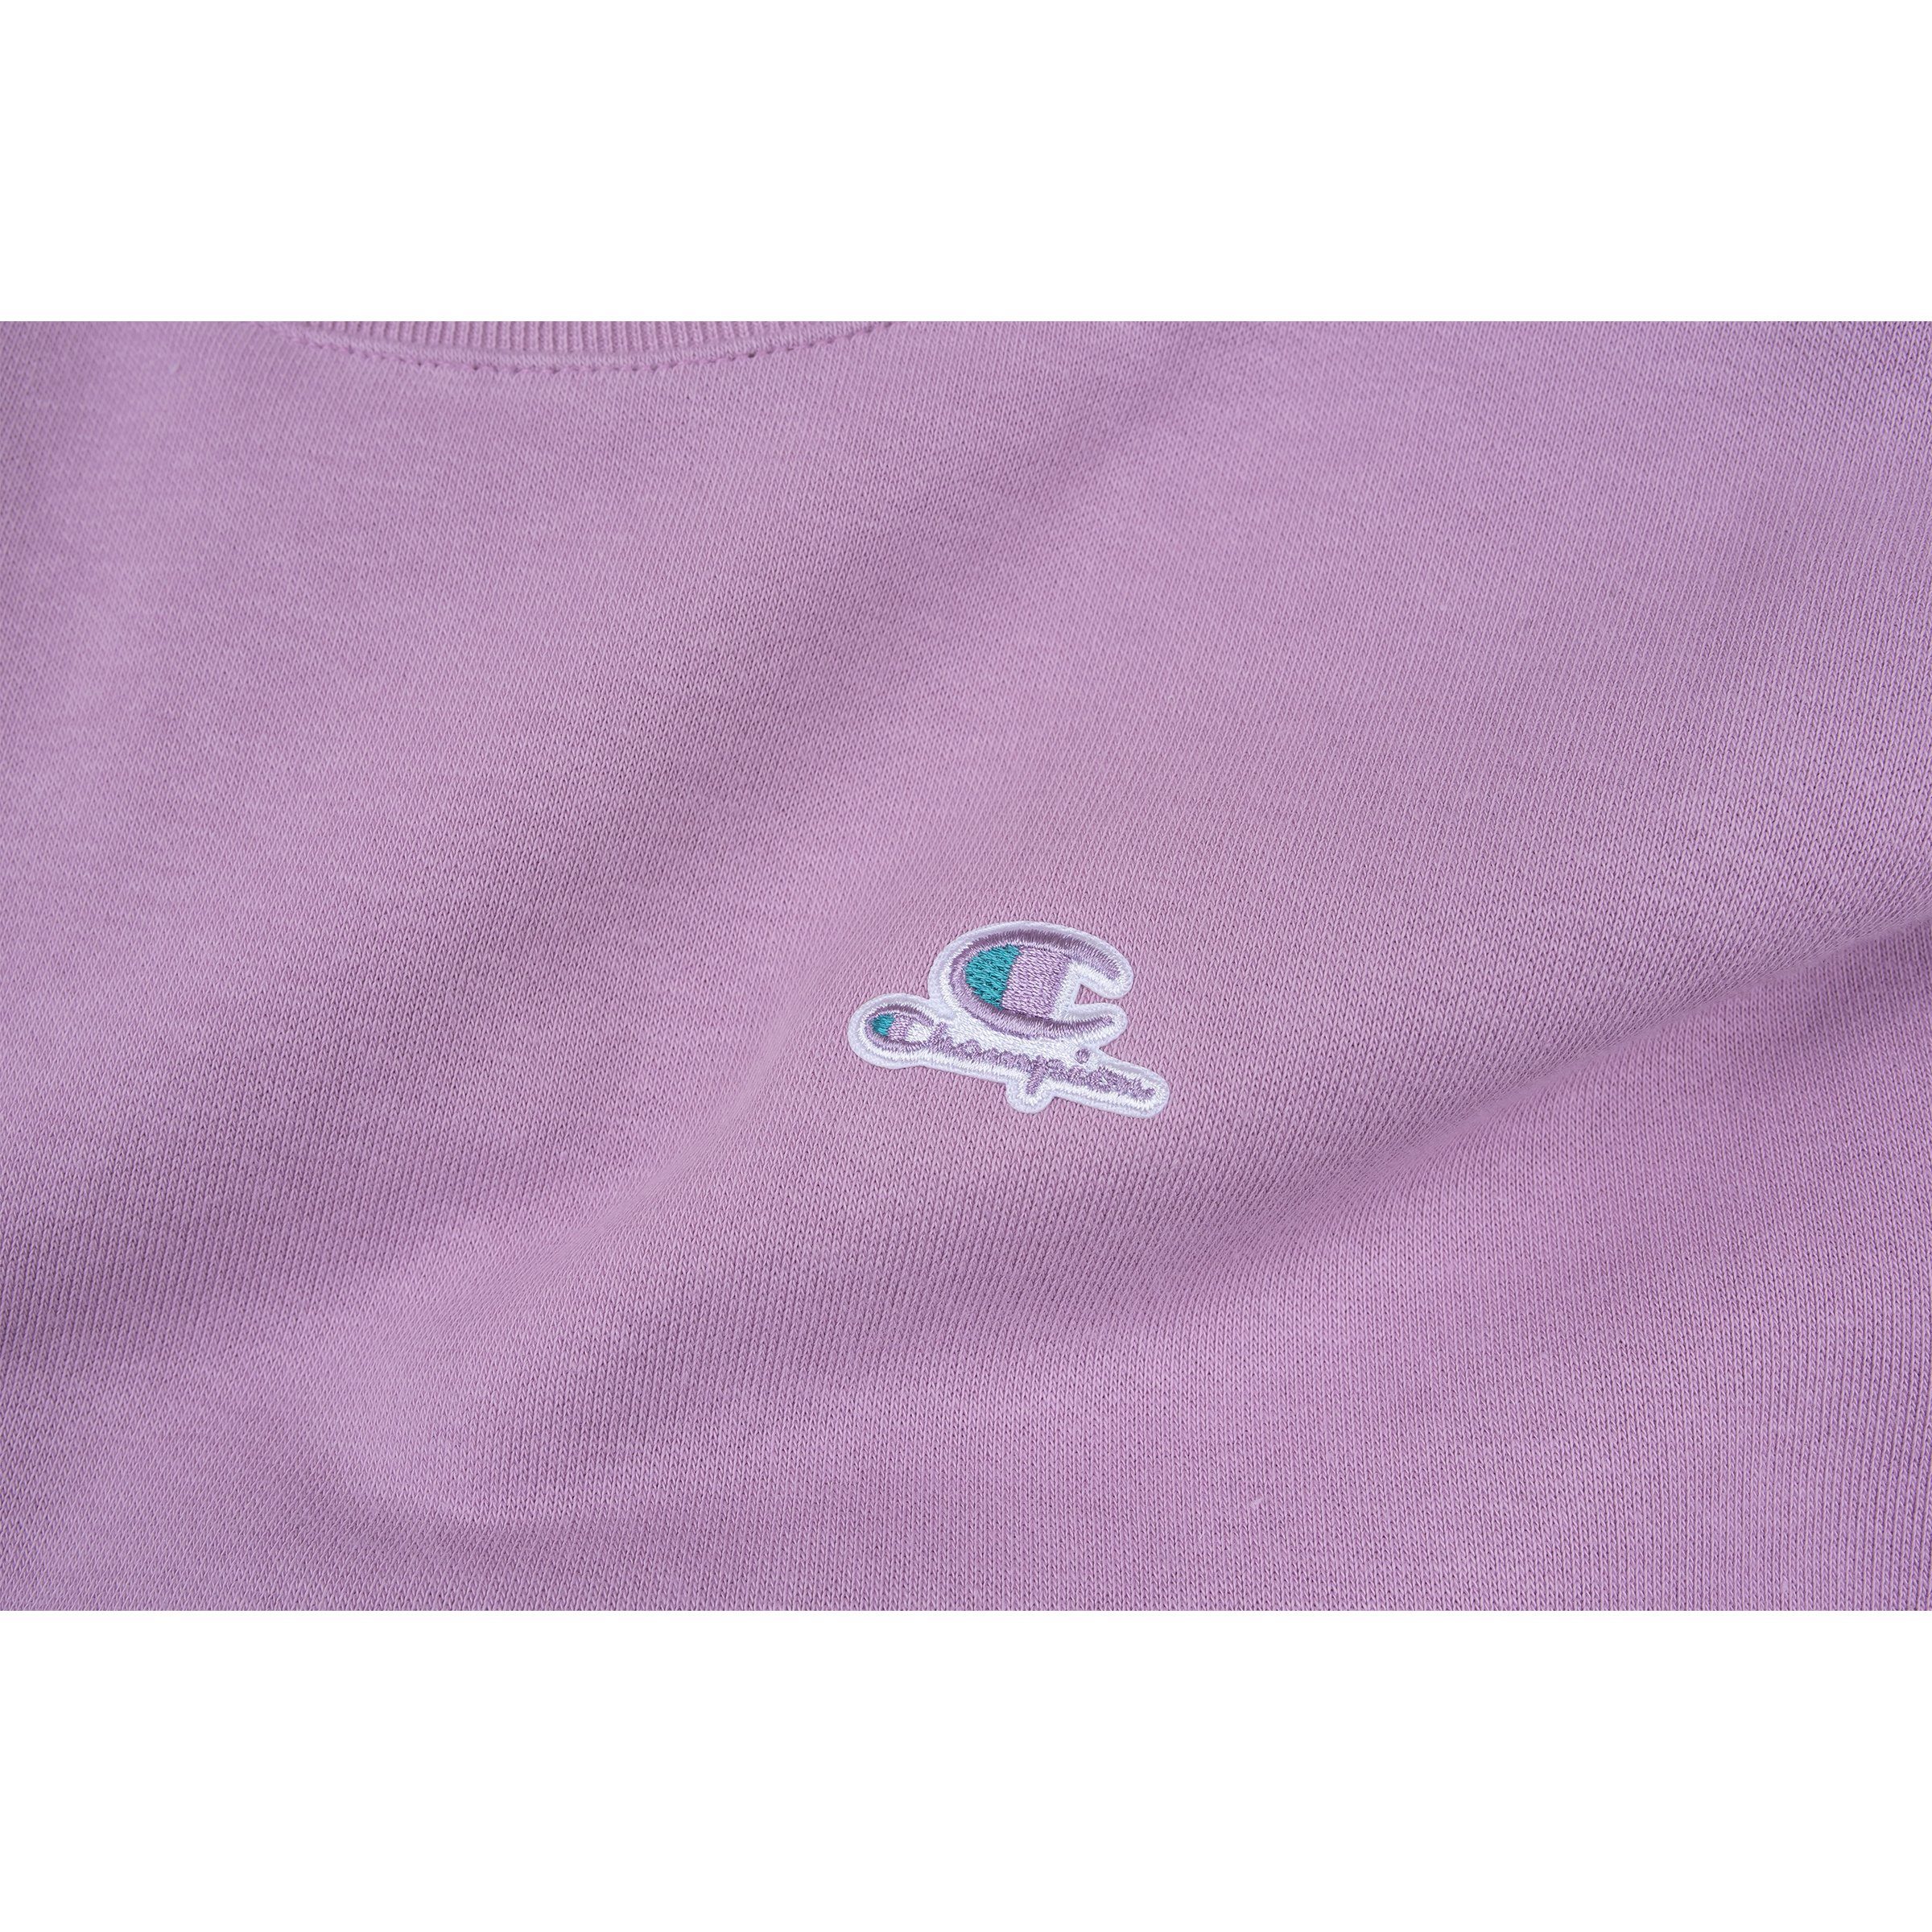 Champion Sweatshirt Damen grl 114923 (violet) Sweatshirt Champion Crewneck